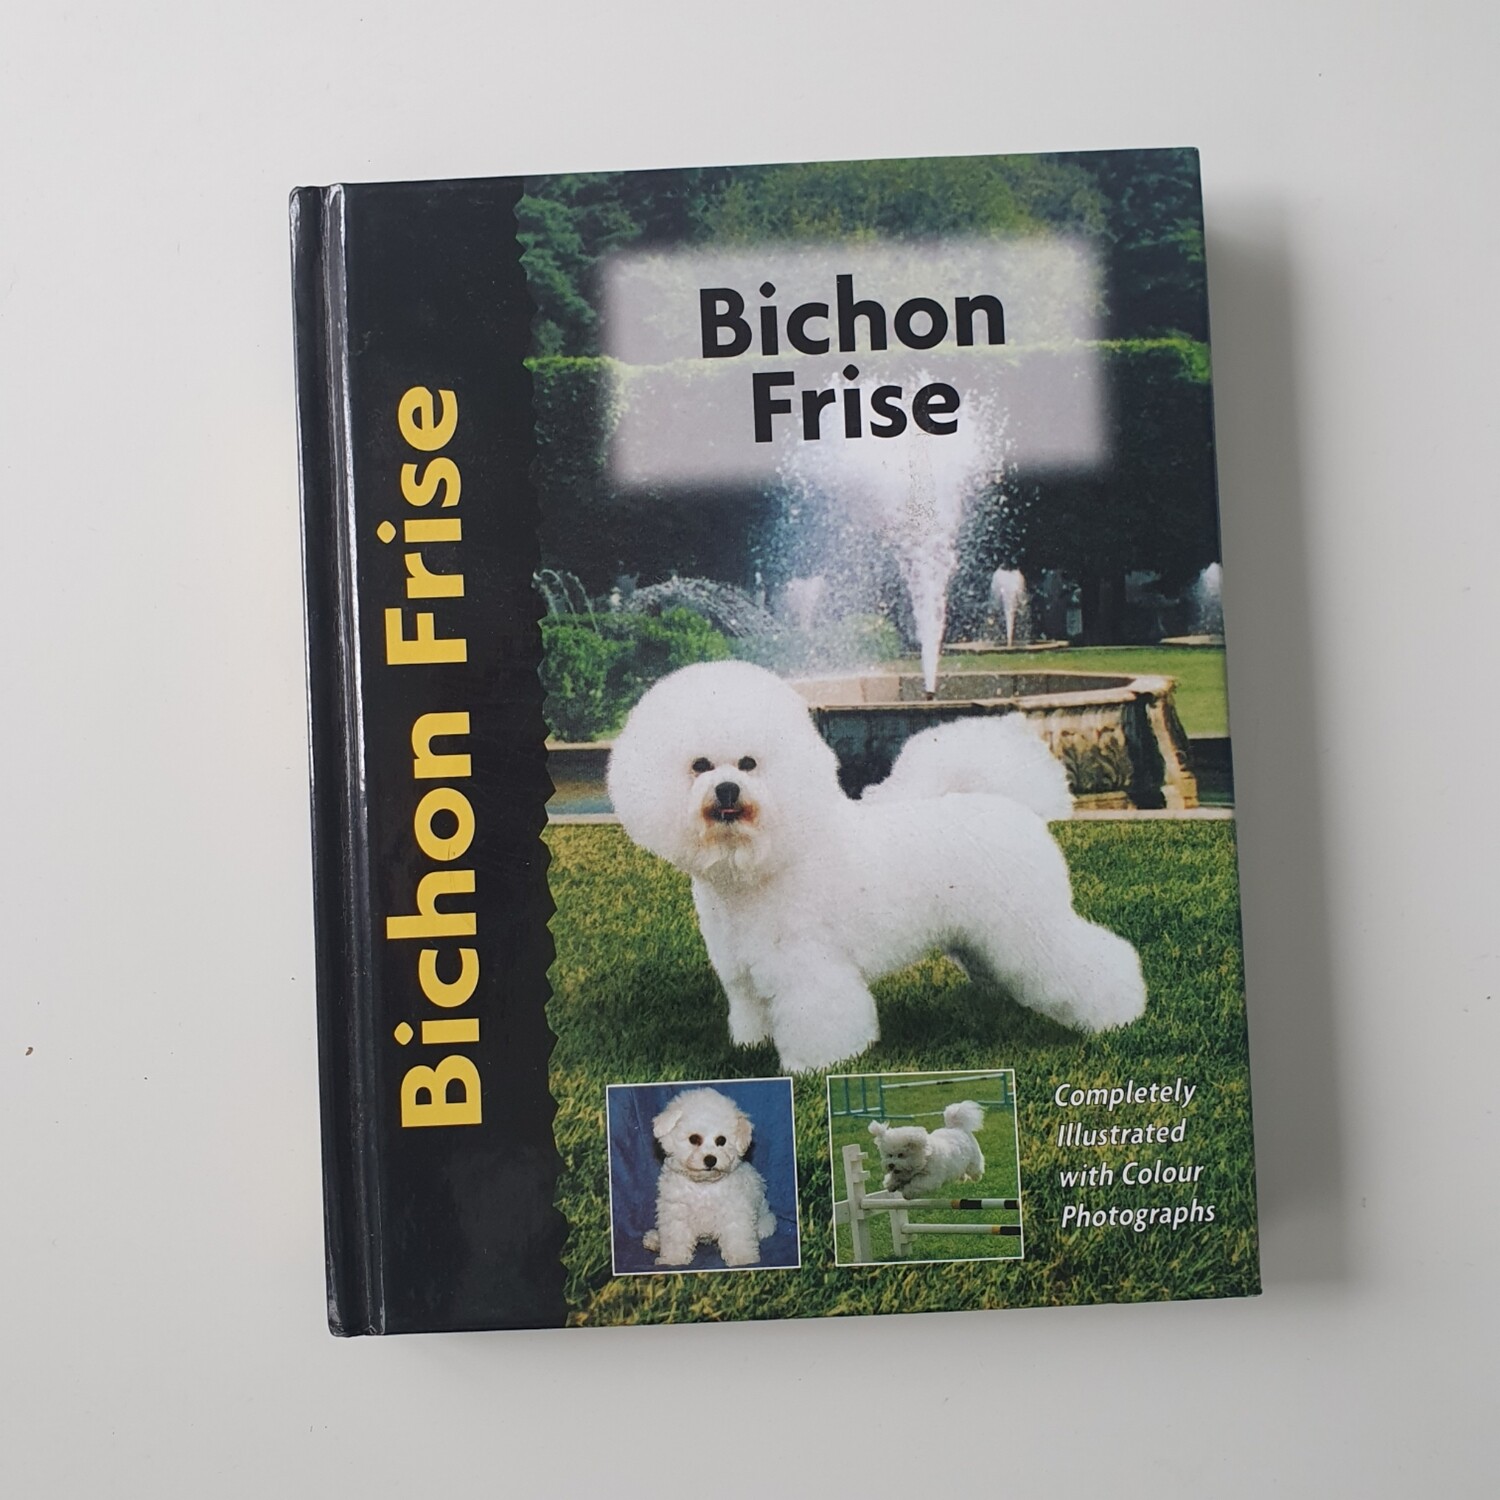 Bichon Frise - dog